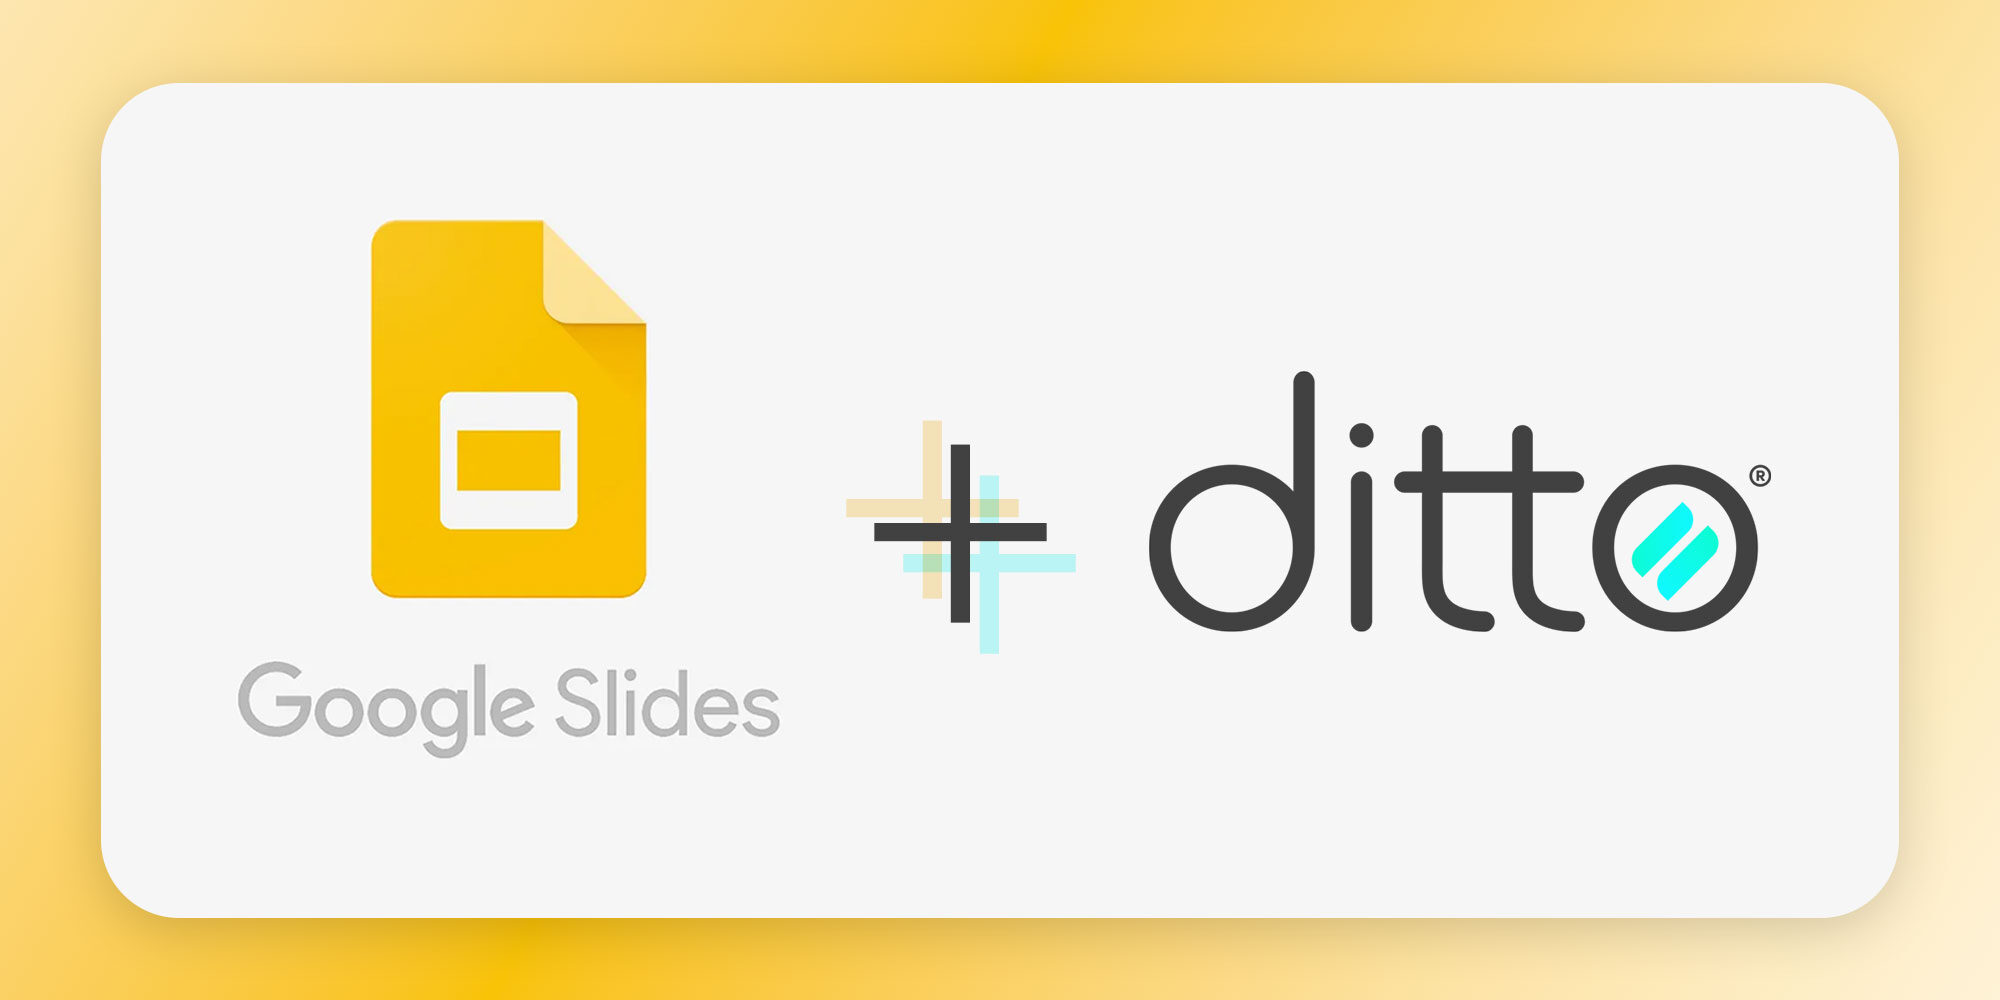 Google Slides and Ditto digital signage